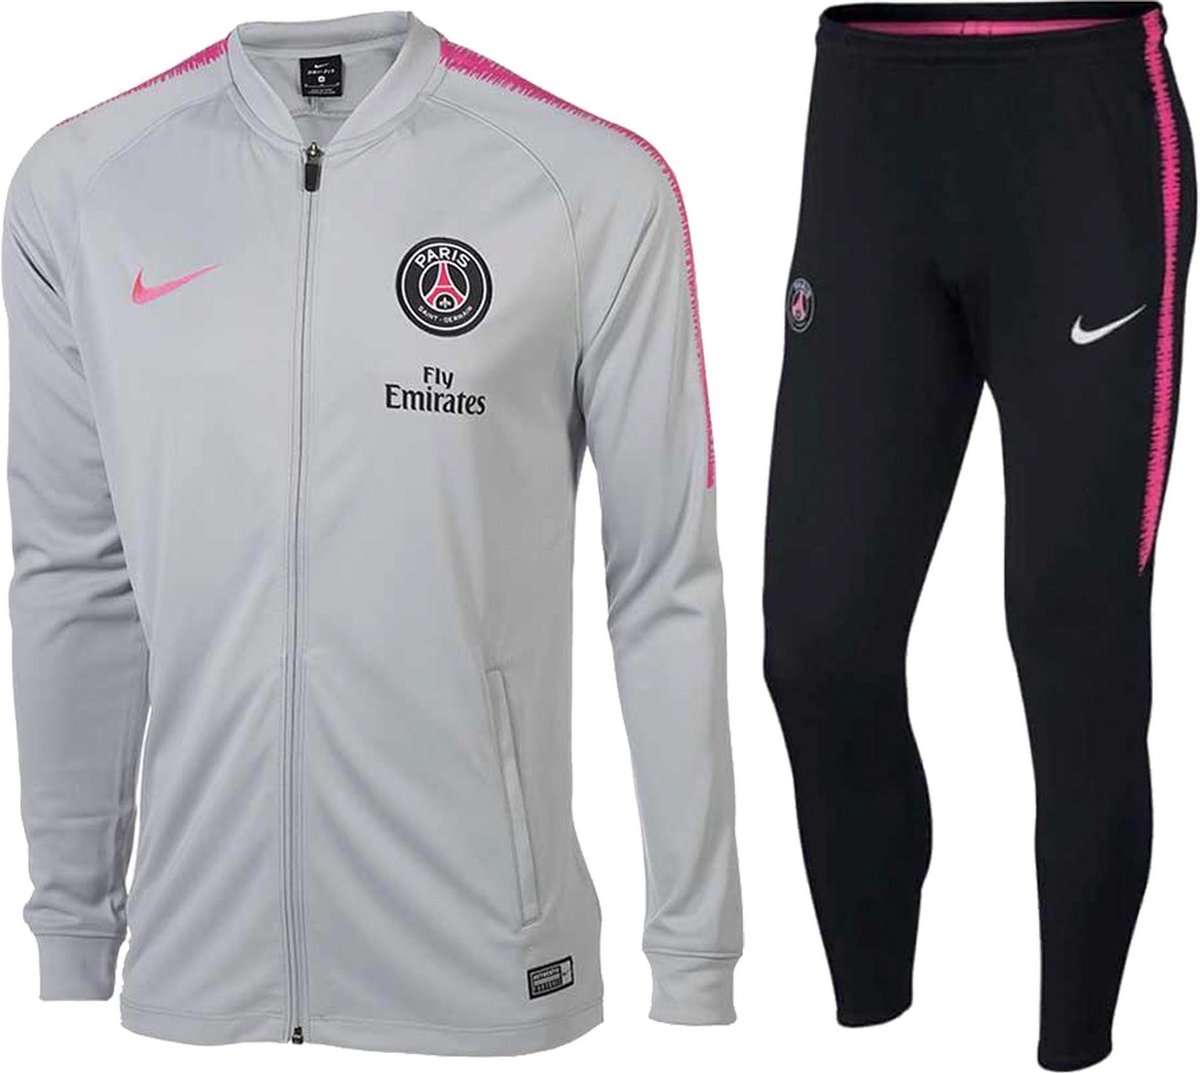 Vet monster Broers en zussen Nike Dry PSG Trainingspak casual - Maat M - Mannen - grijs/roze | bol.com